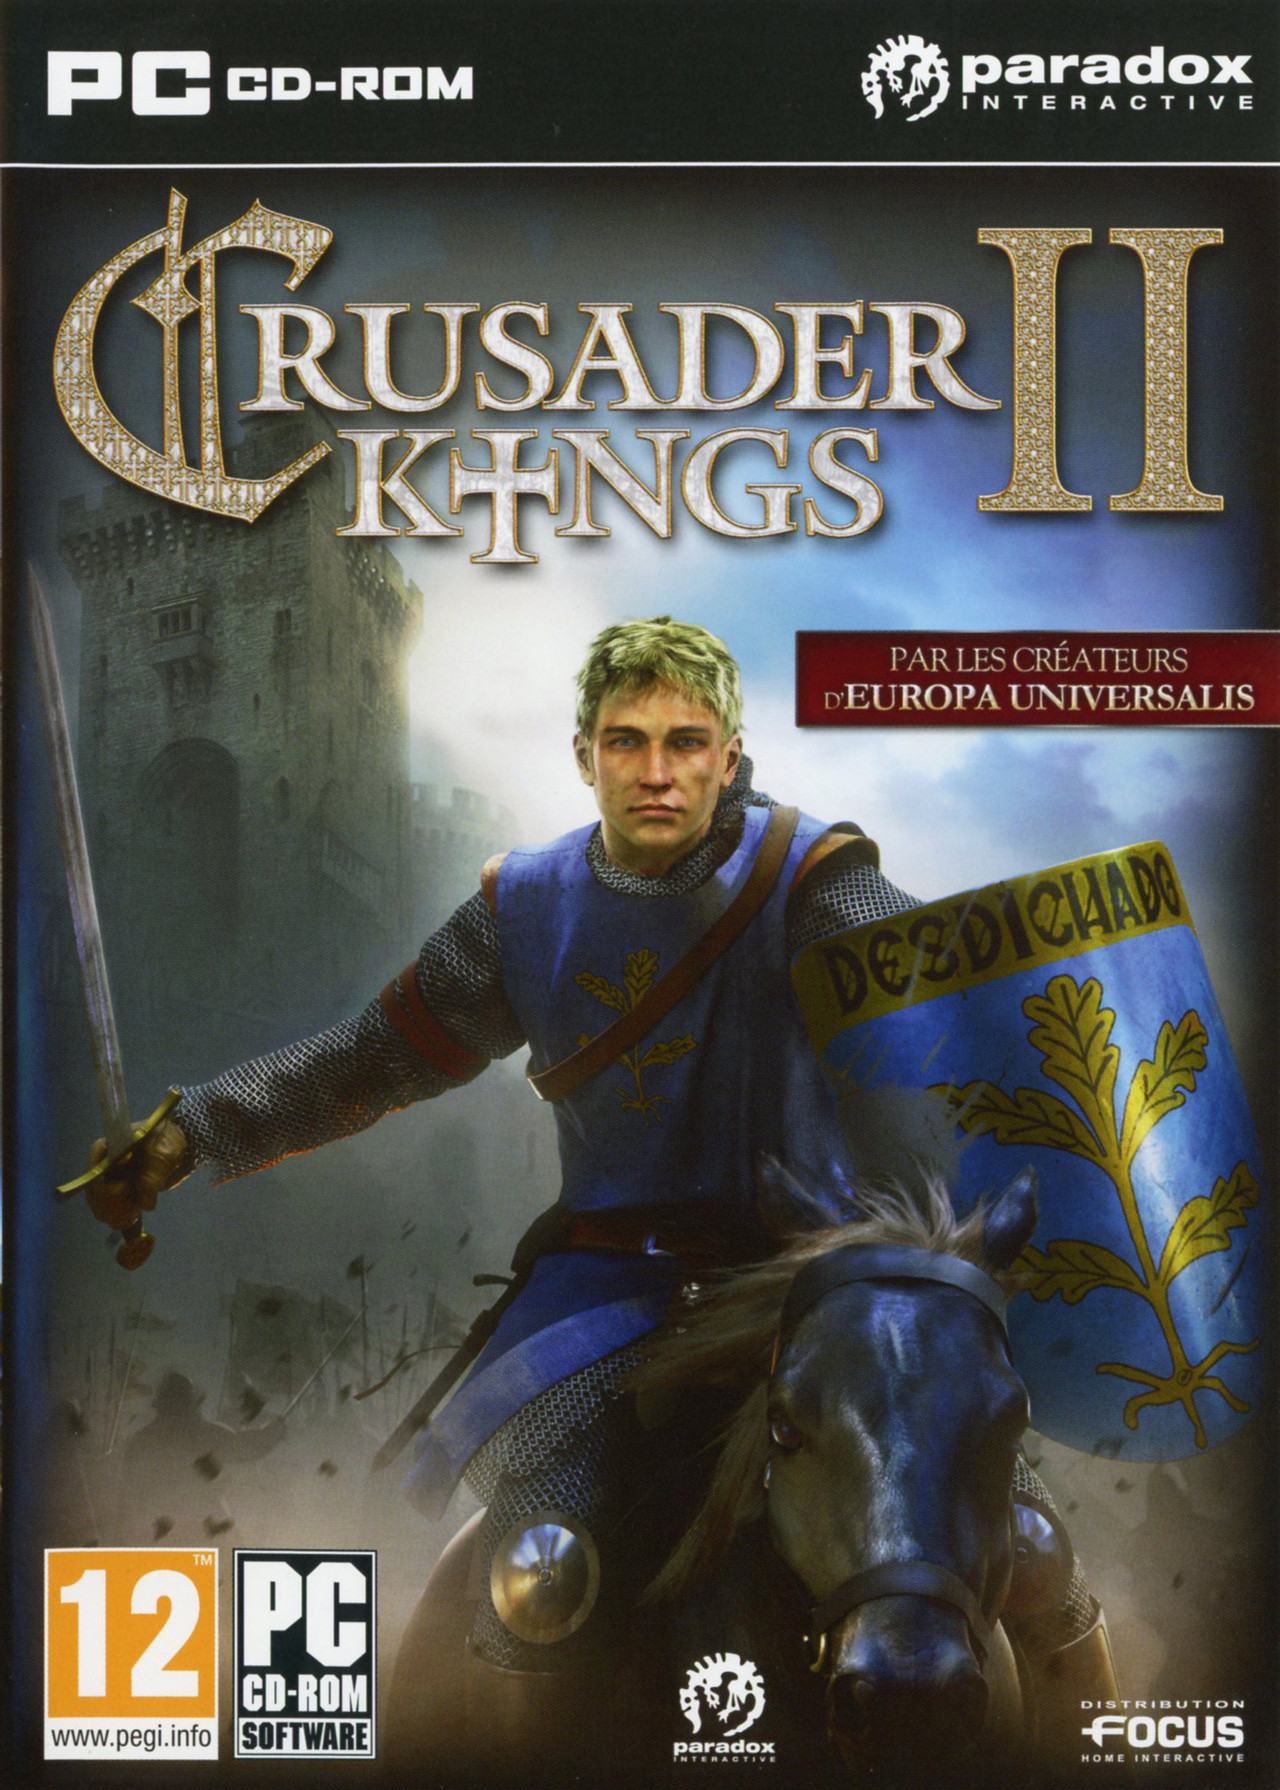 Crusader Kings II sur PC - jeuxvideo.com - 1280 x 1790 jpeg 804kB